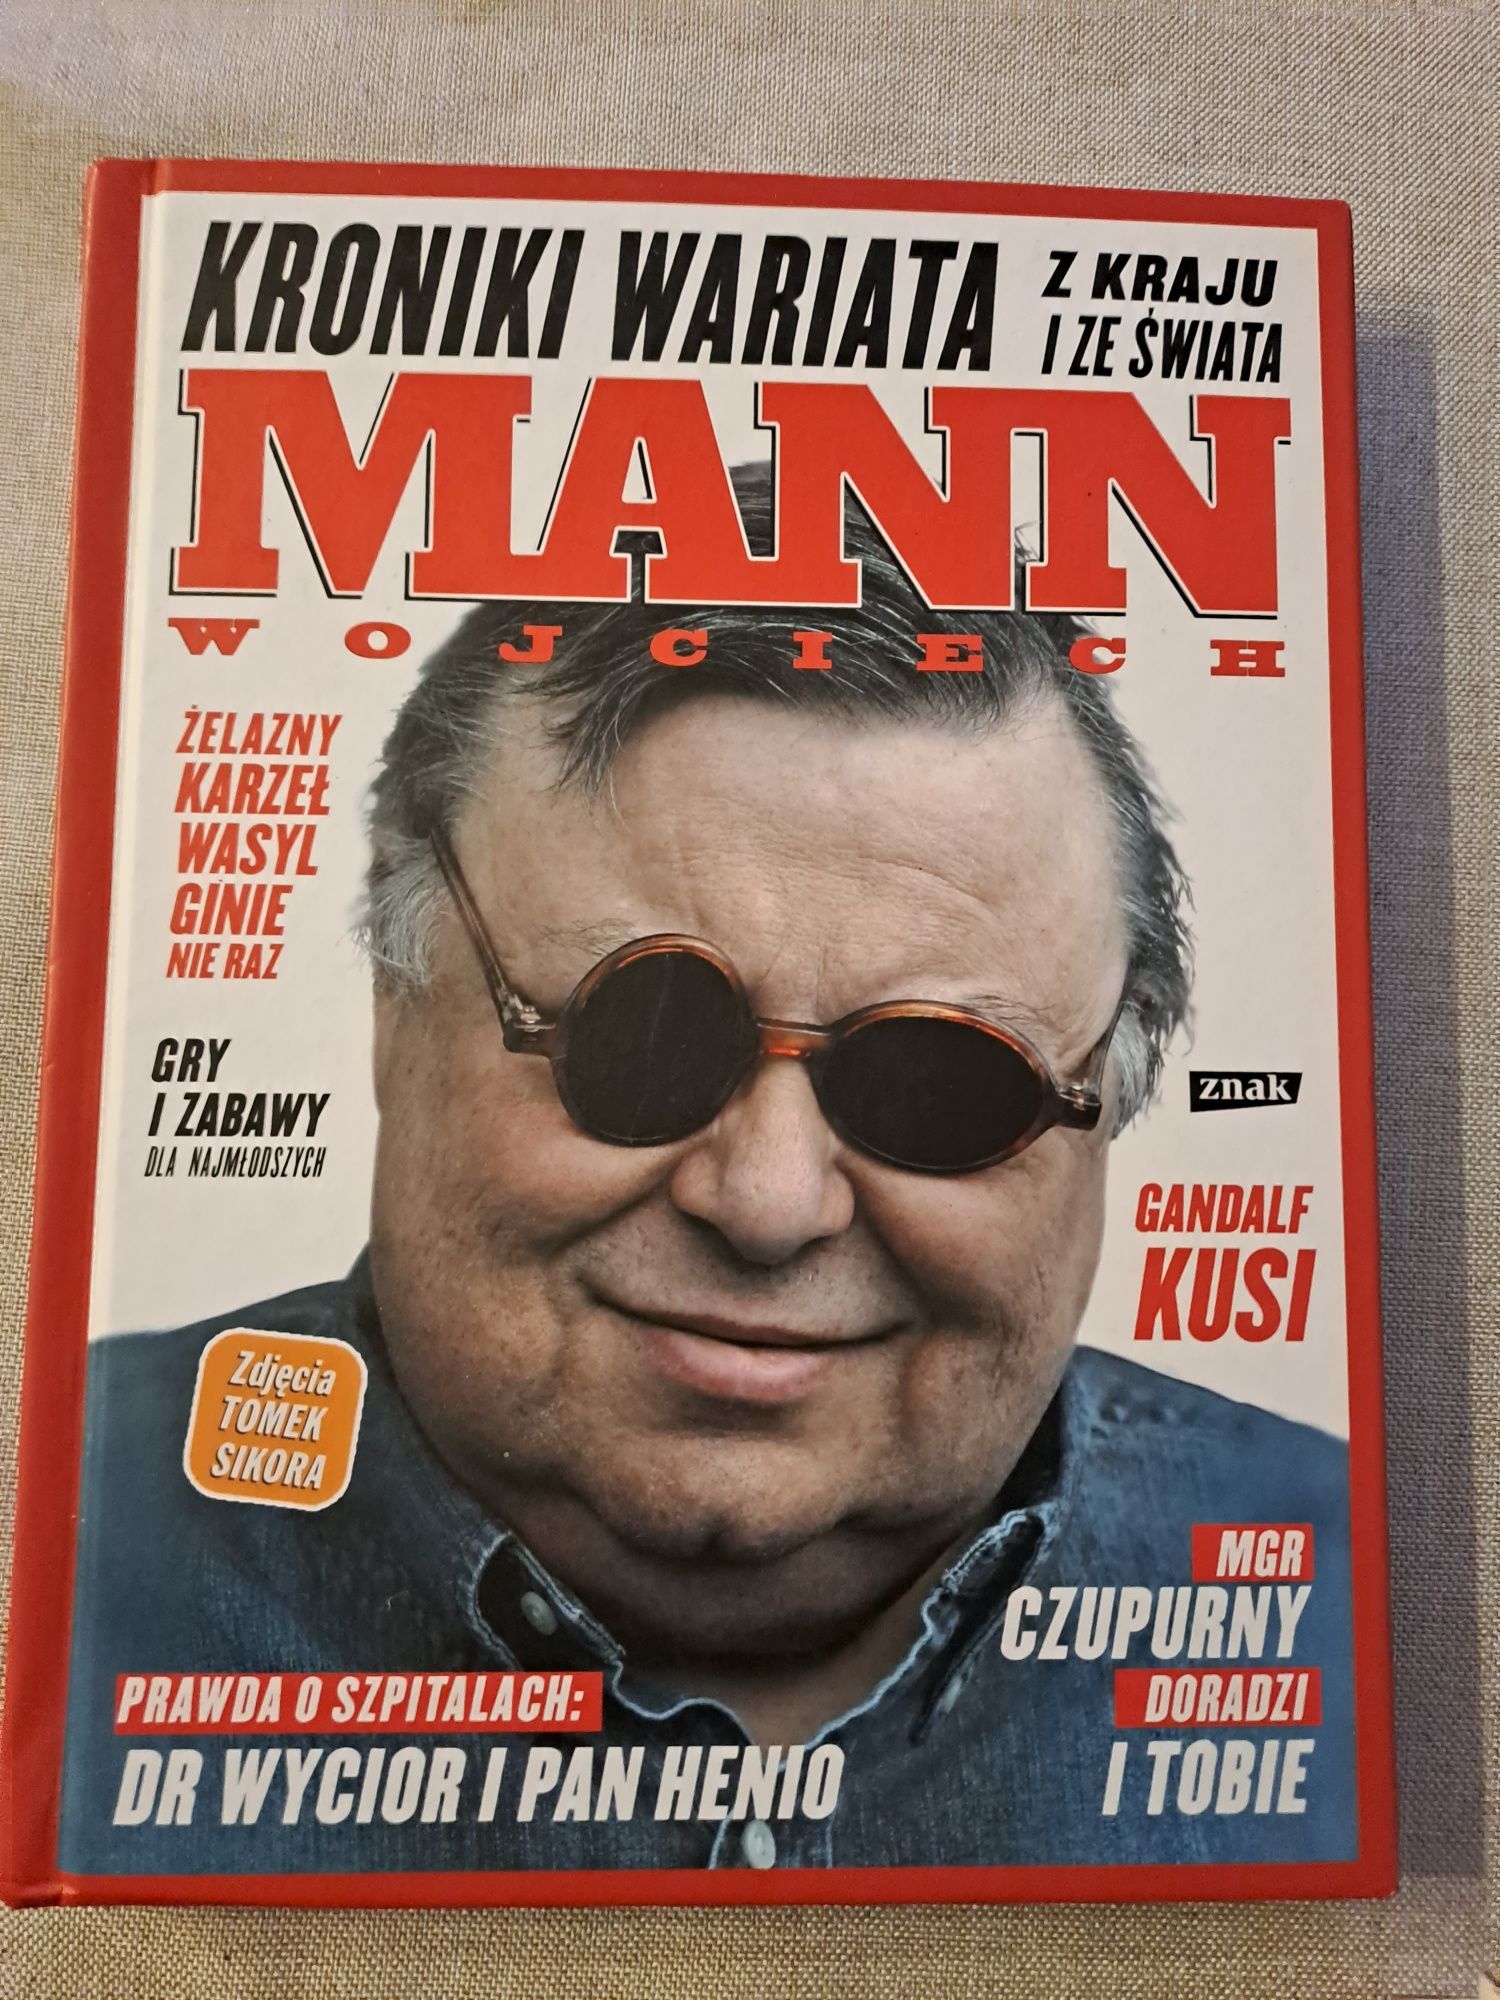 Wojciech Mann  "Kroniki wariata"